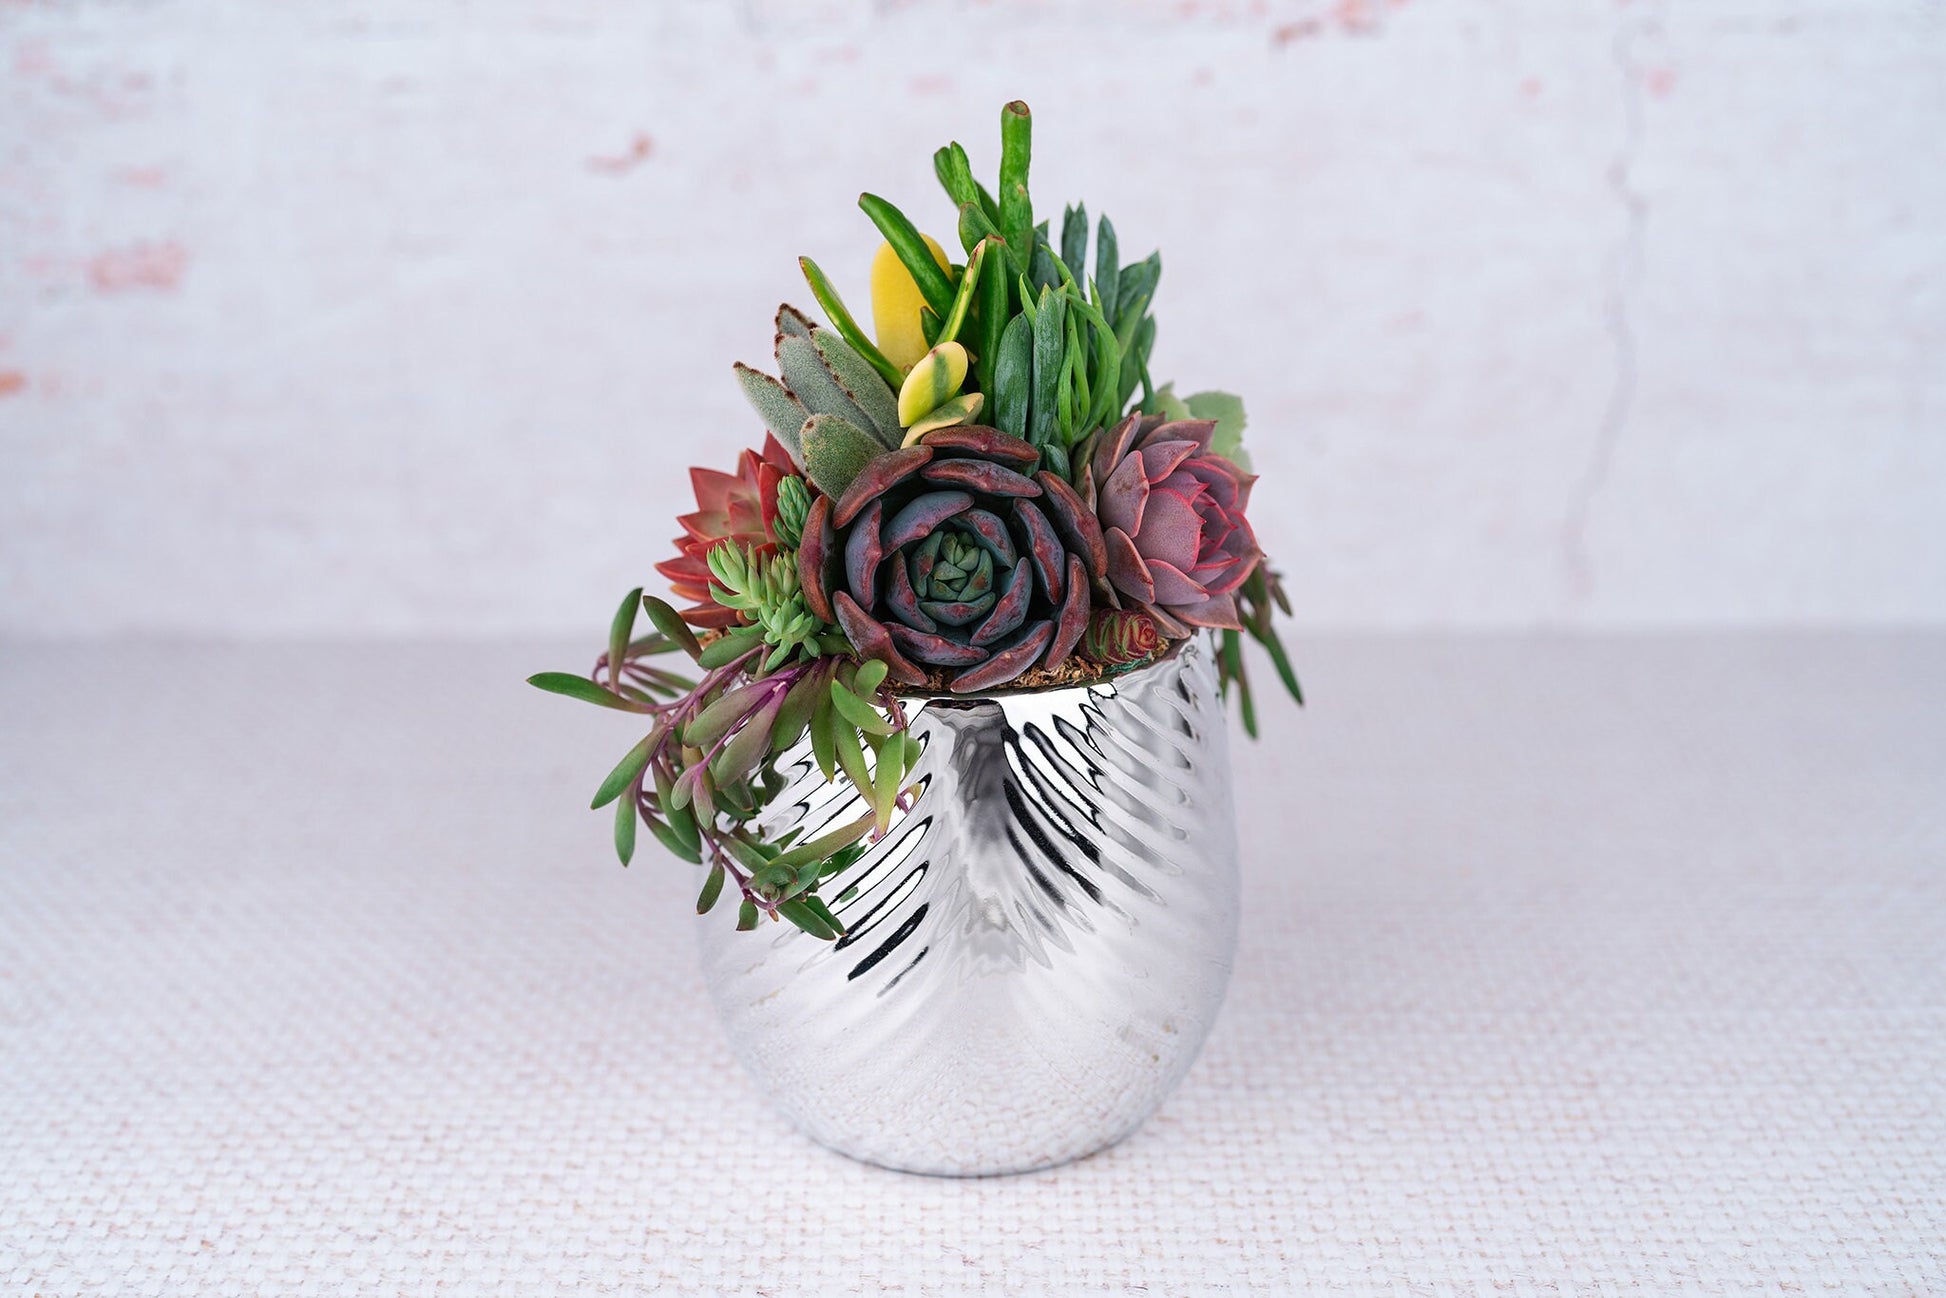 Silver Swirl Succulent Arrangement Planter: Modern Living Succulent Gift, Centerpiece for Weddings & Events, Anniversary Gift